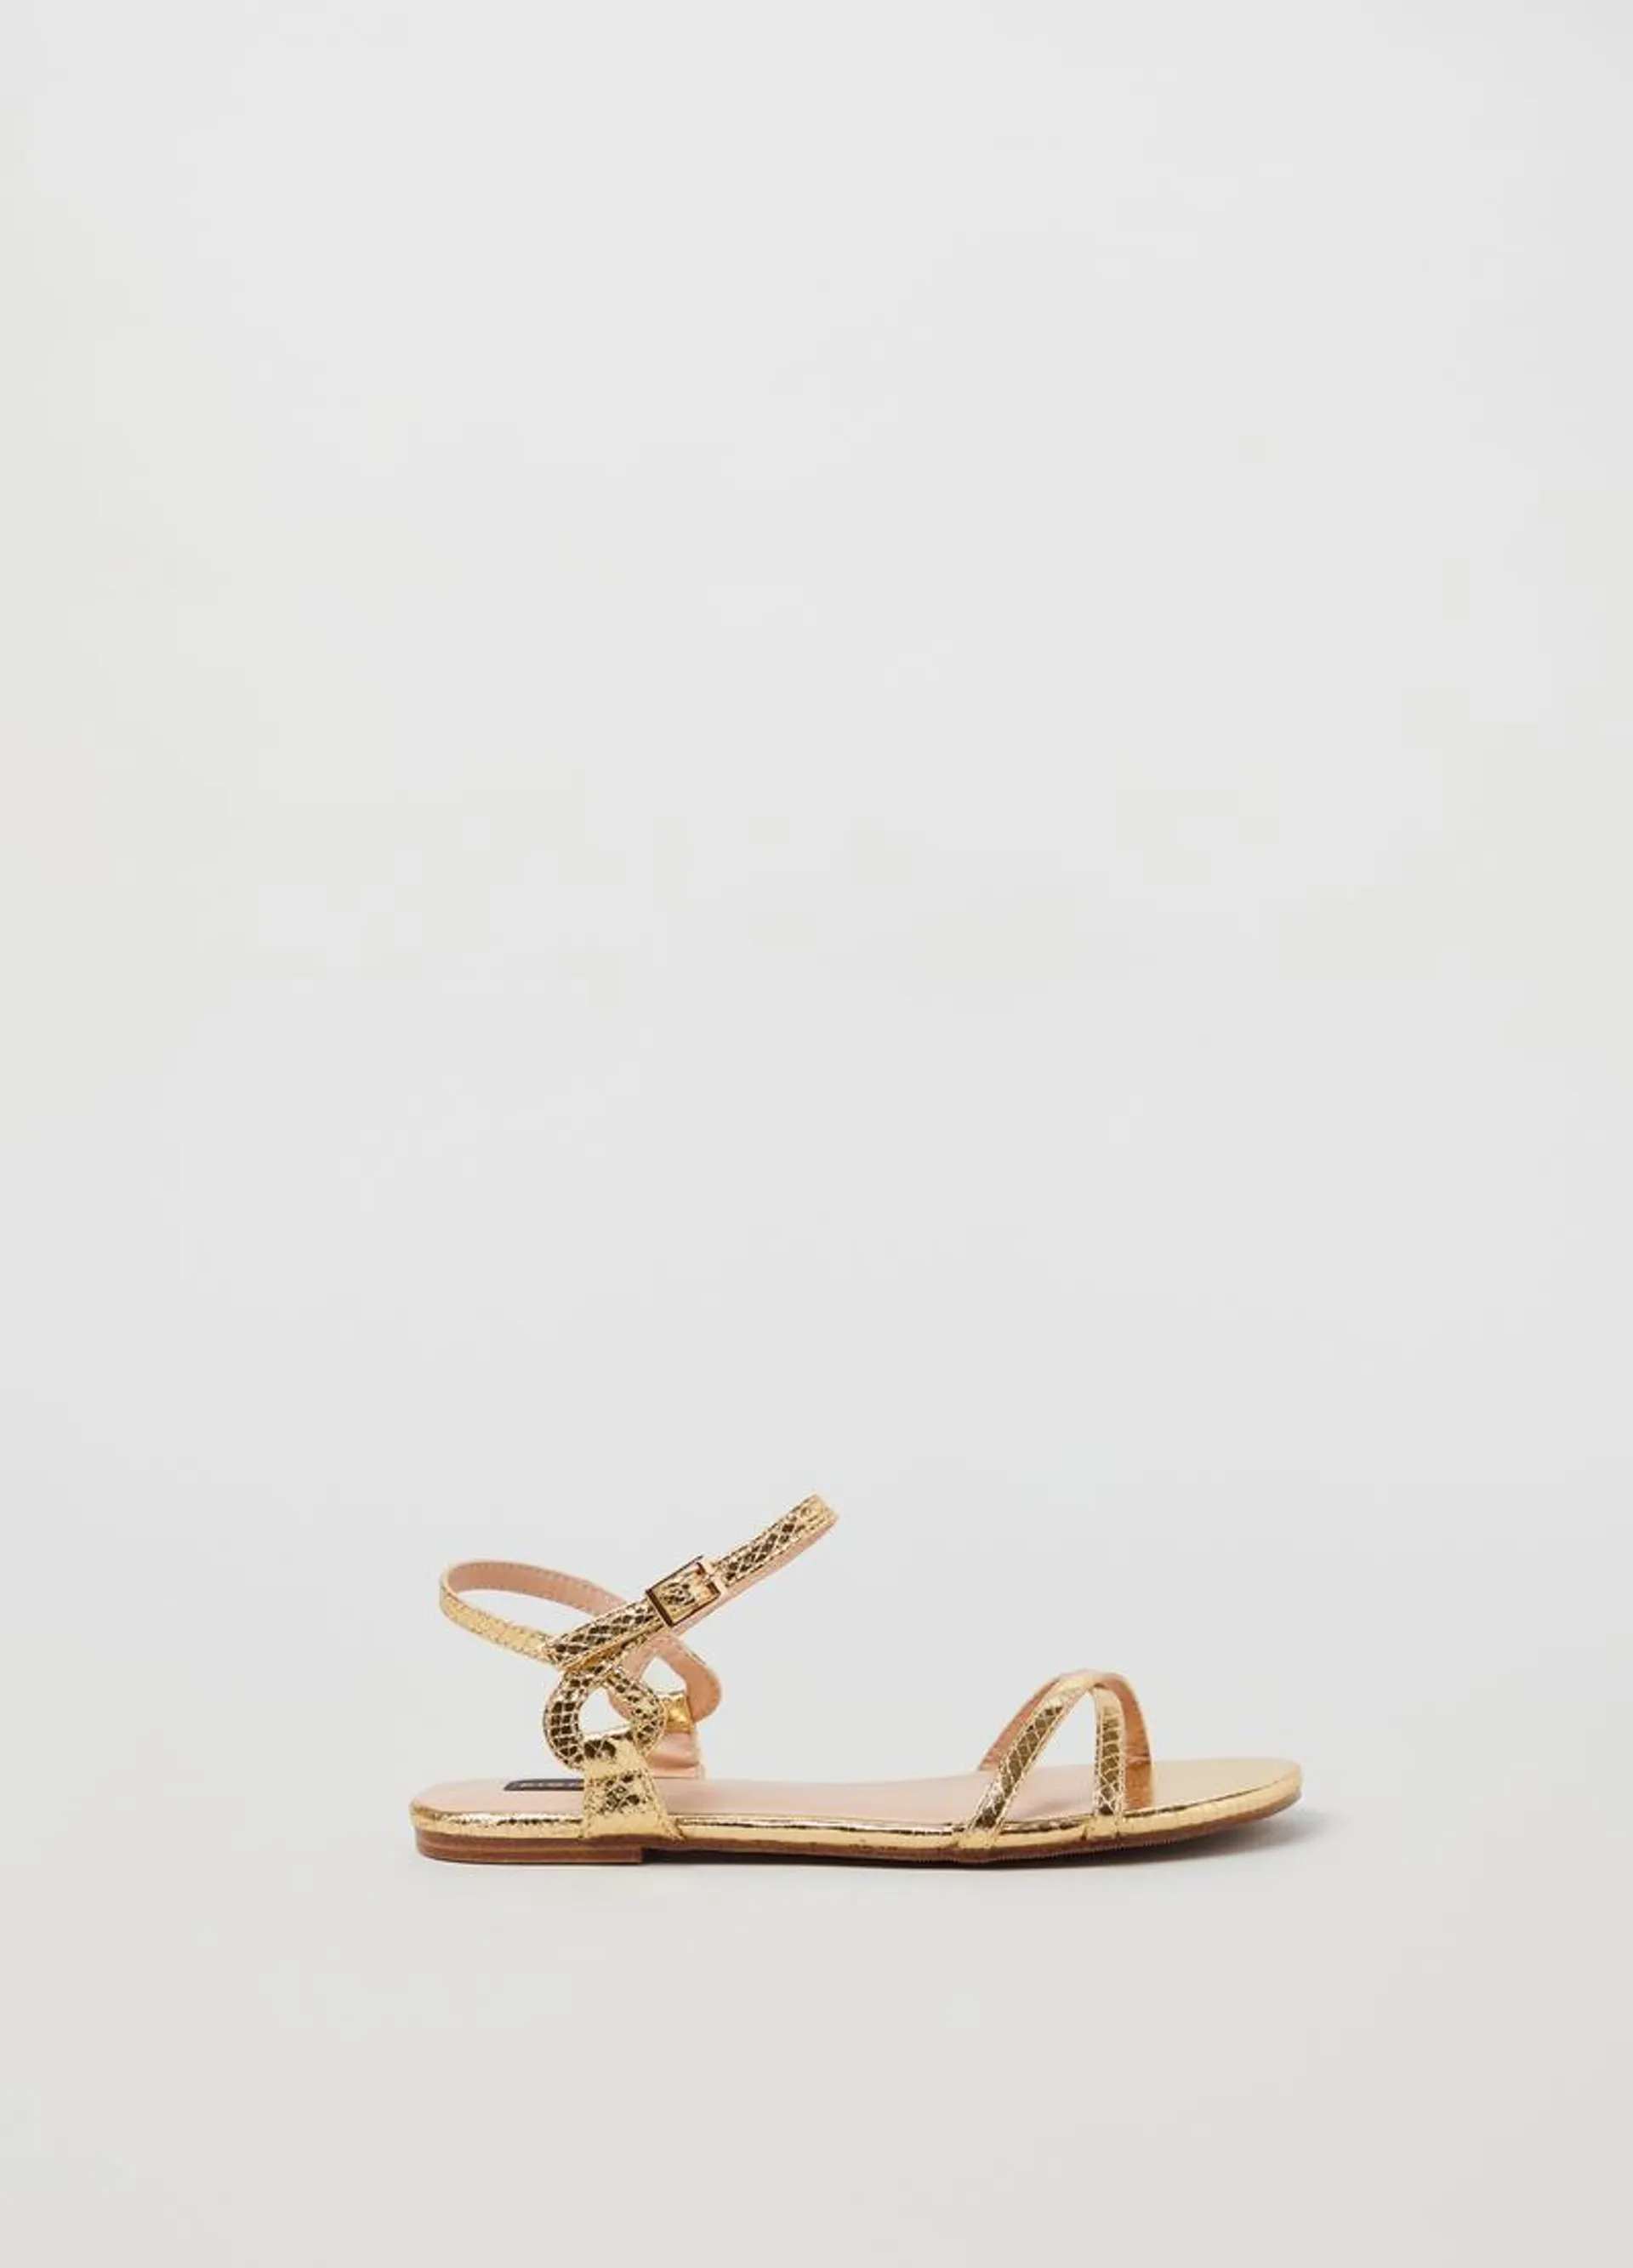 PIOMBO metallic sandals with animal print